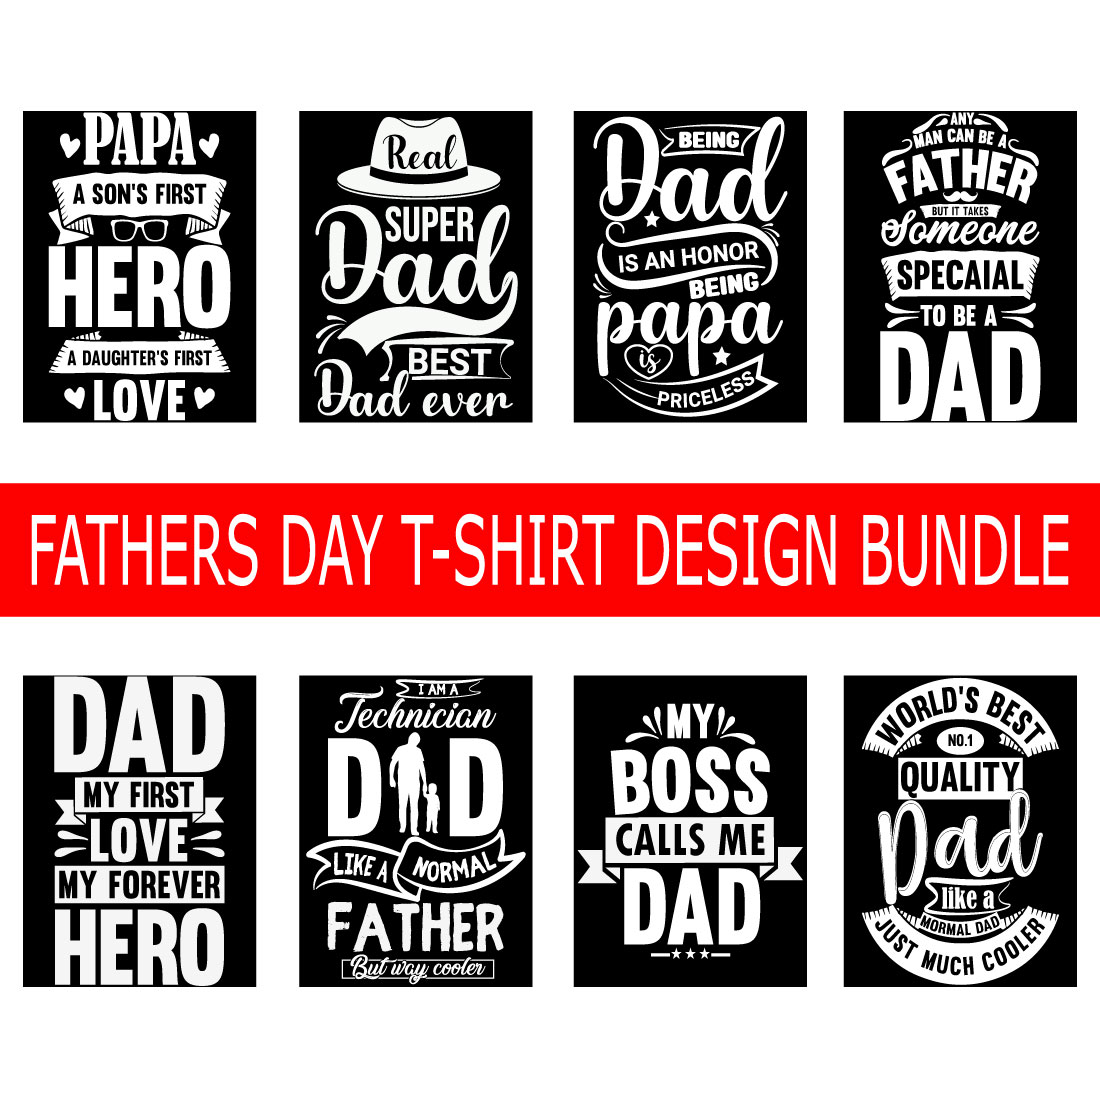 Papa typography t-shirt design bundle cover image.